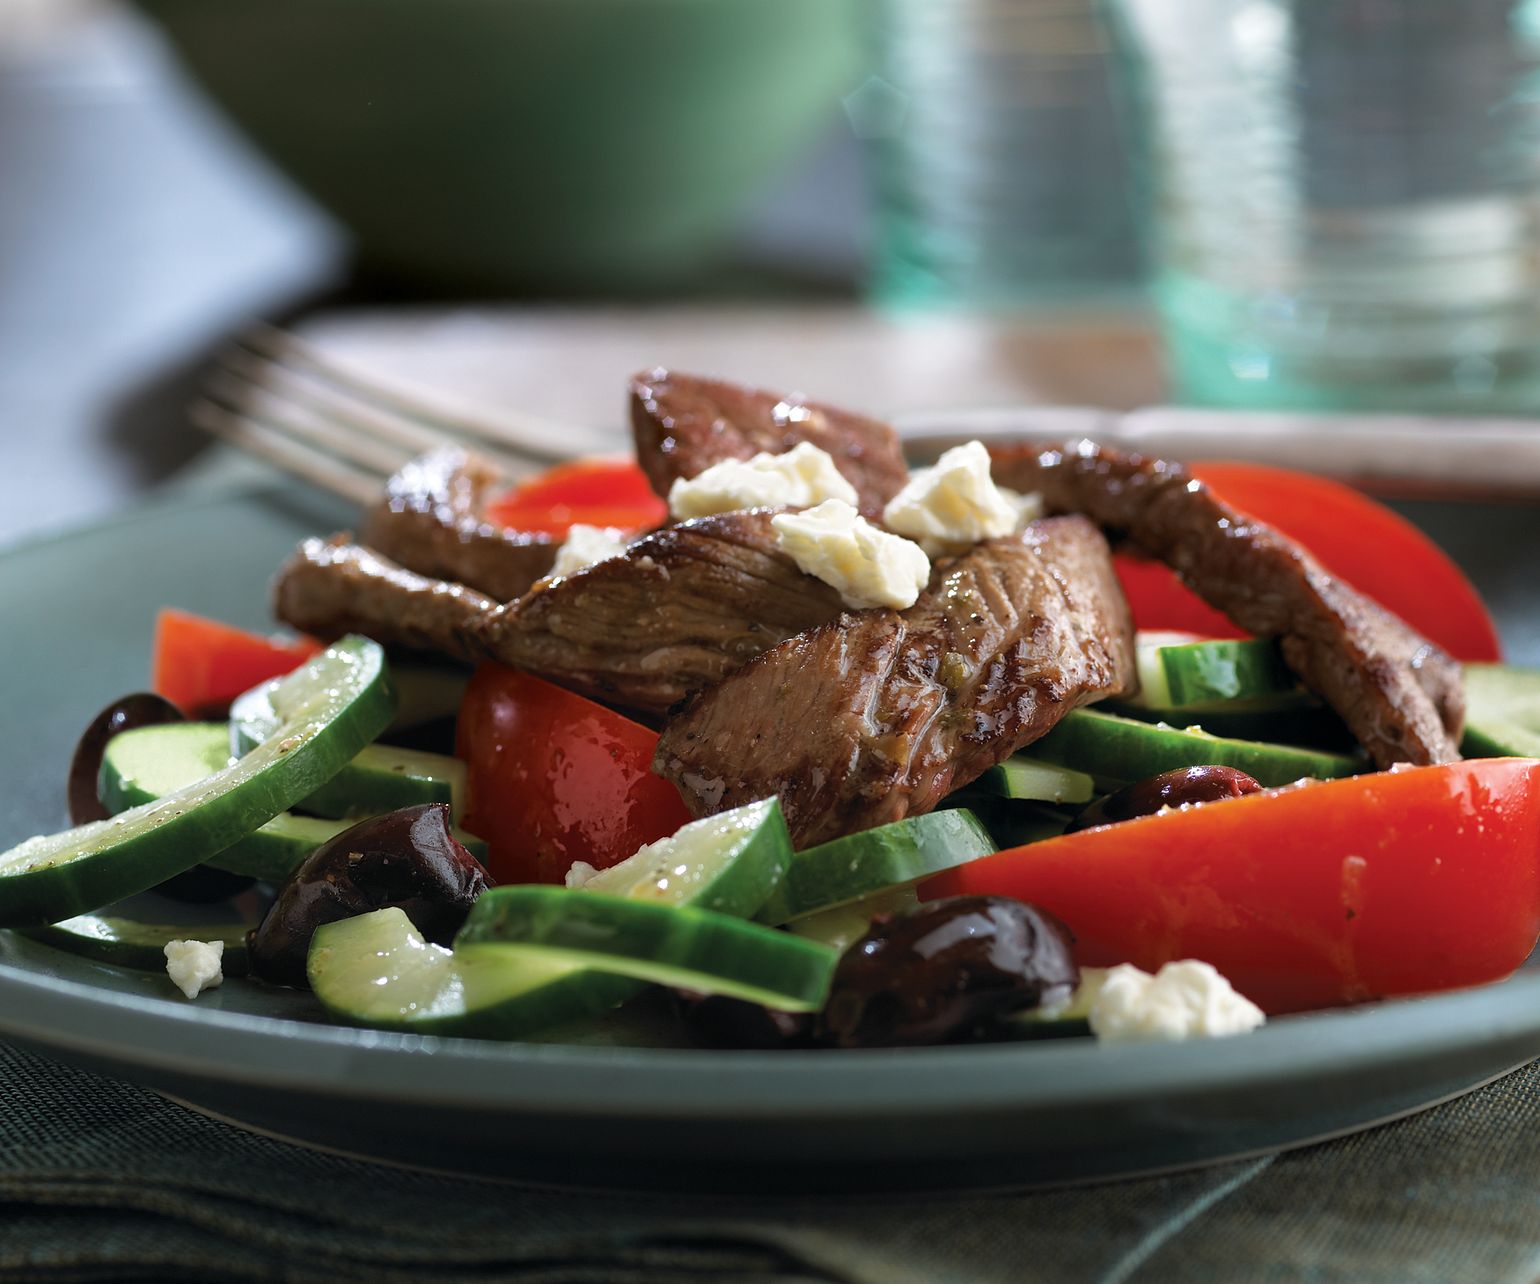 Grecian Beef, Tomato & Cucumber Salad